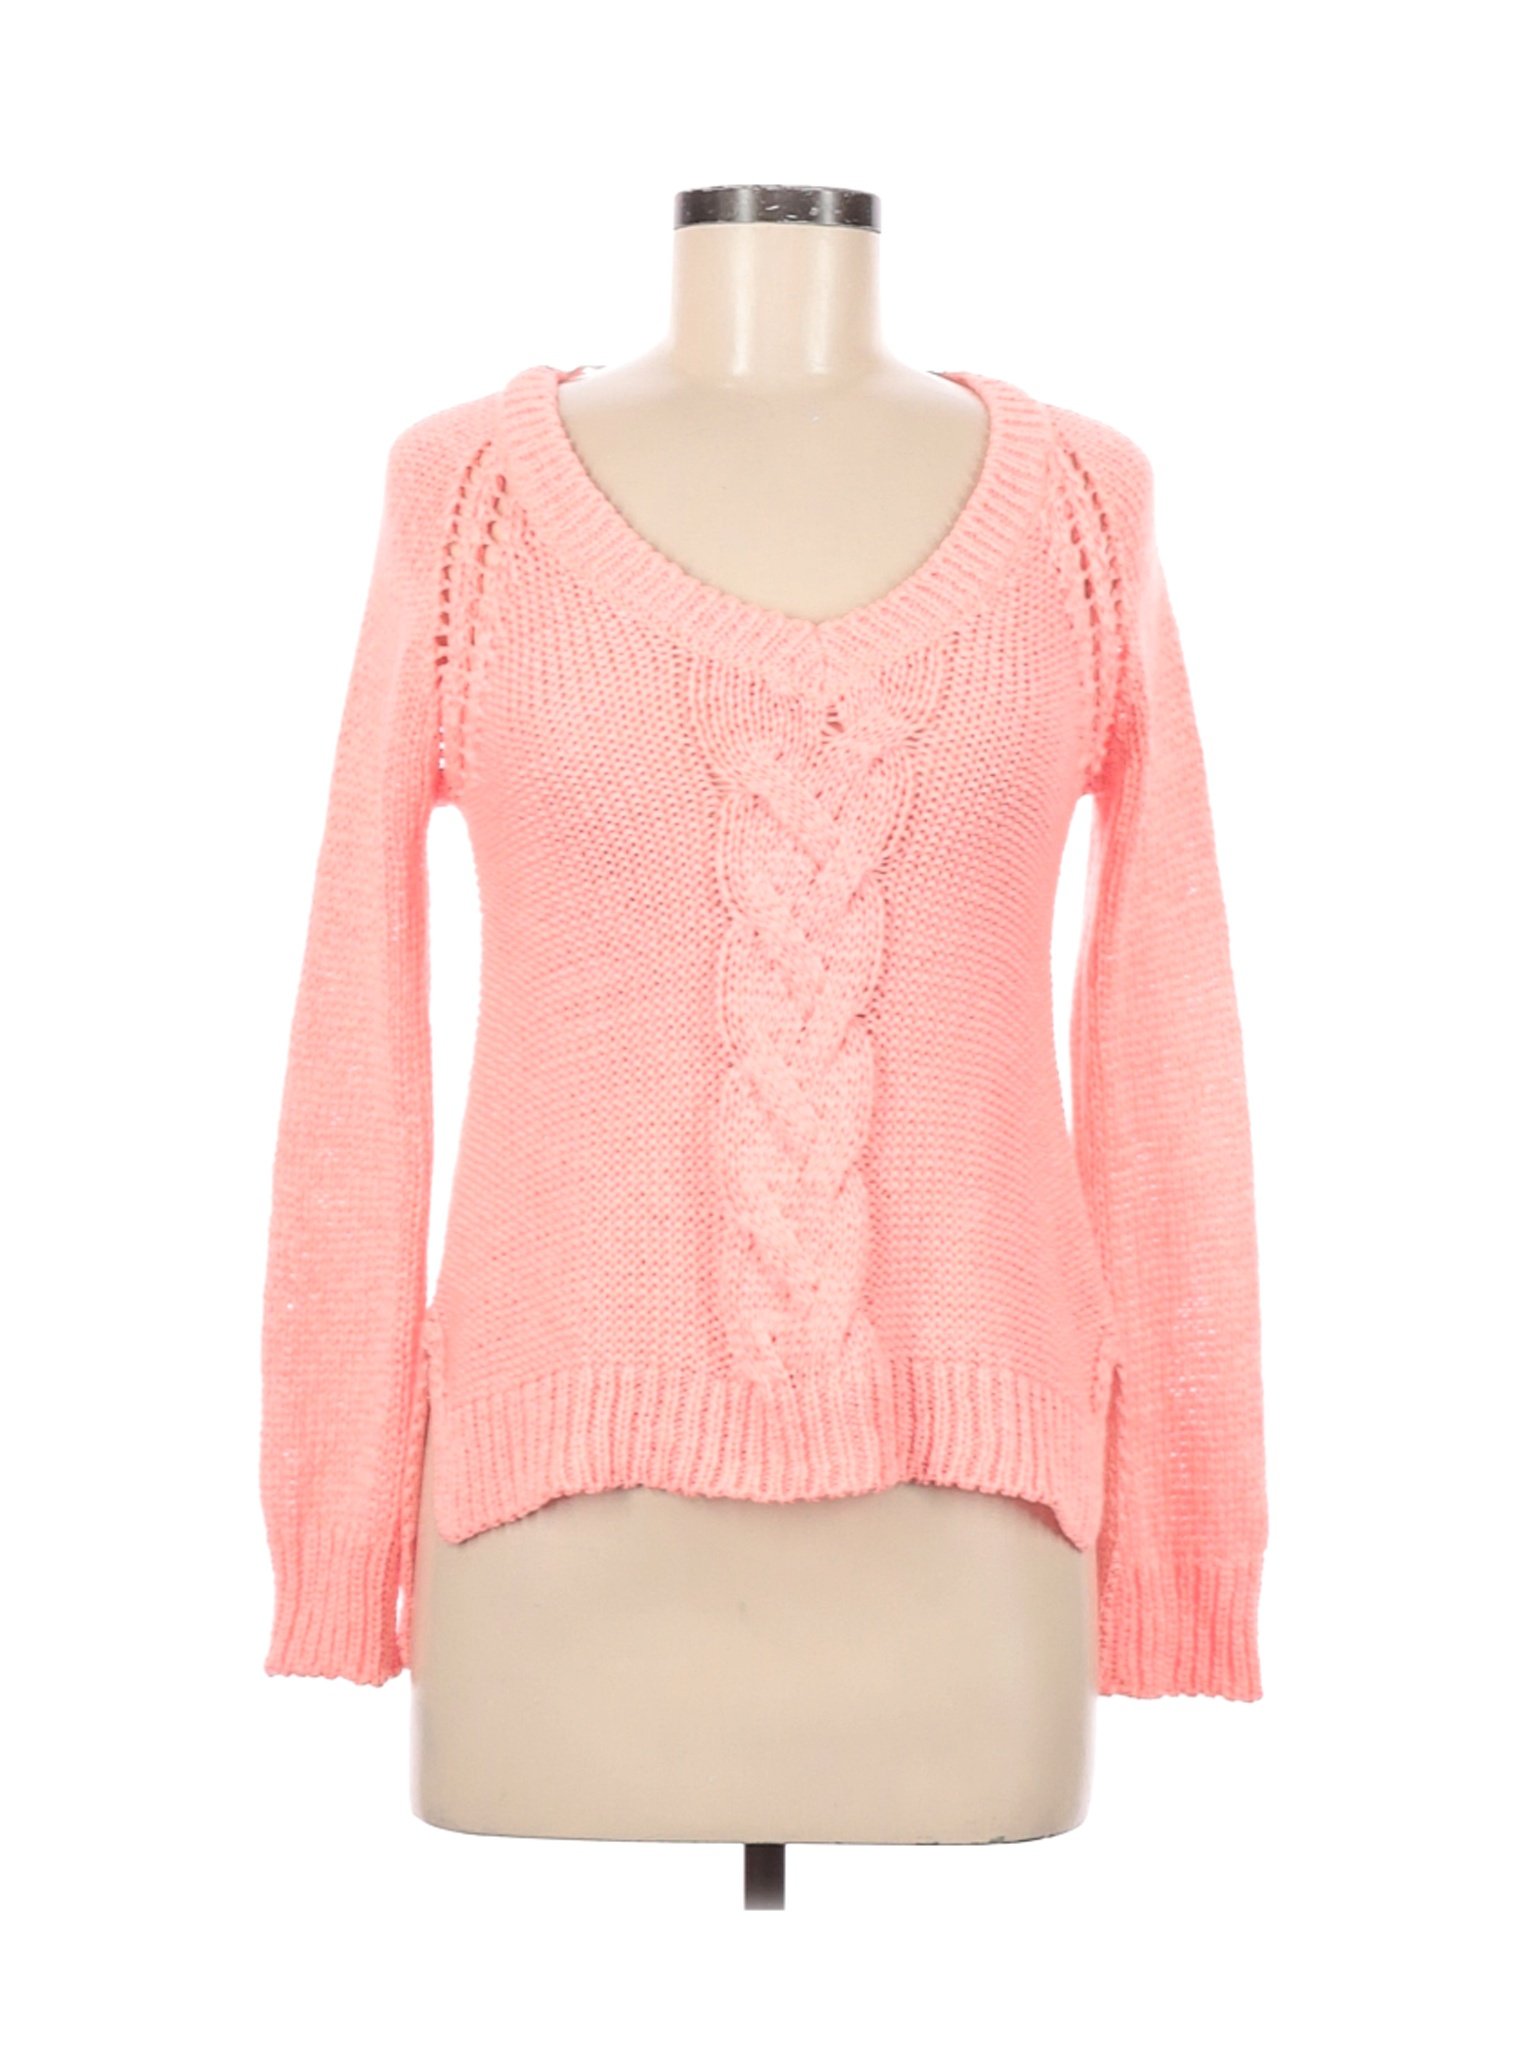 Zara Women Pink Pullover Sweater S | eBay